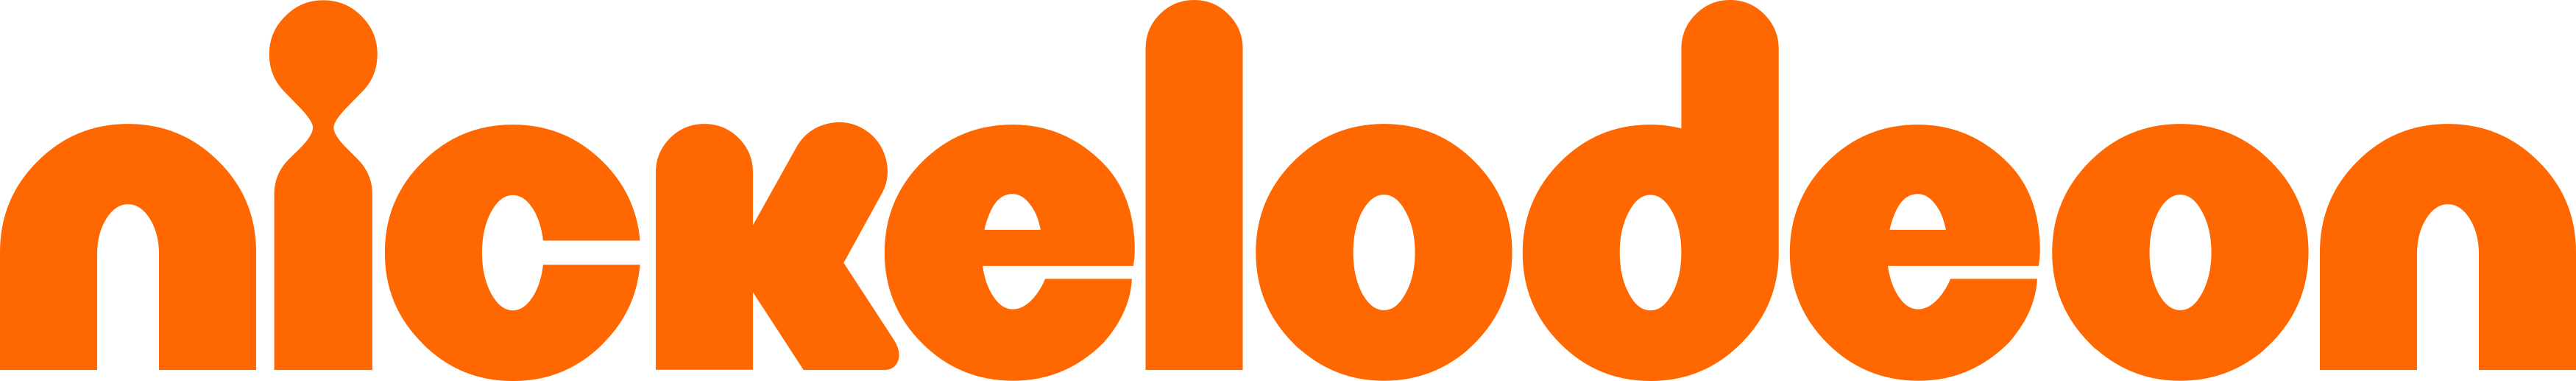 Nickelodeon Logo.